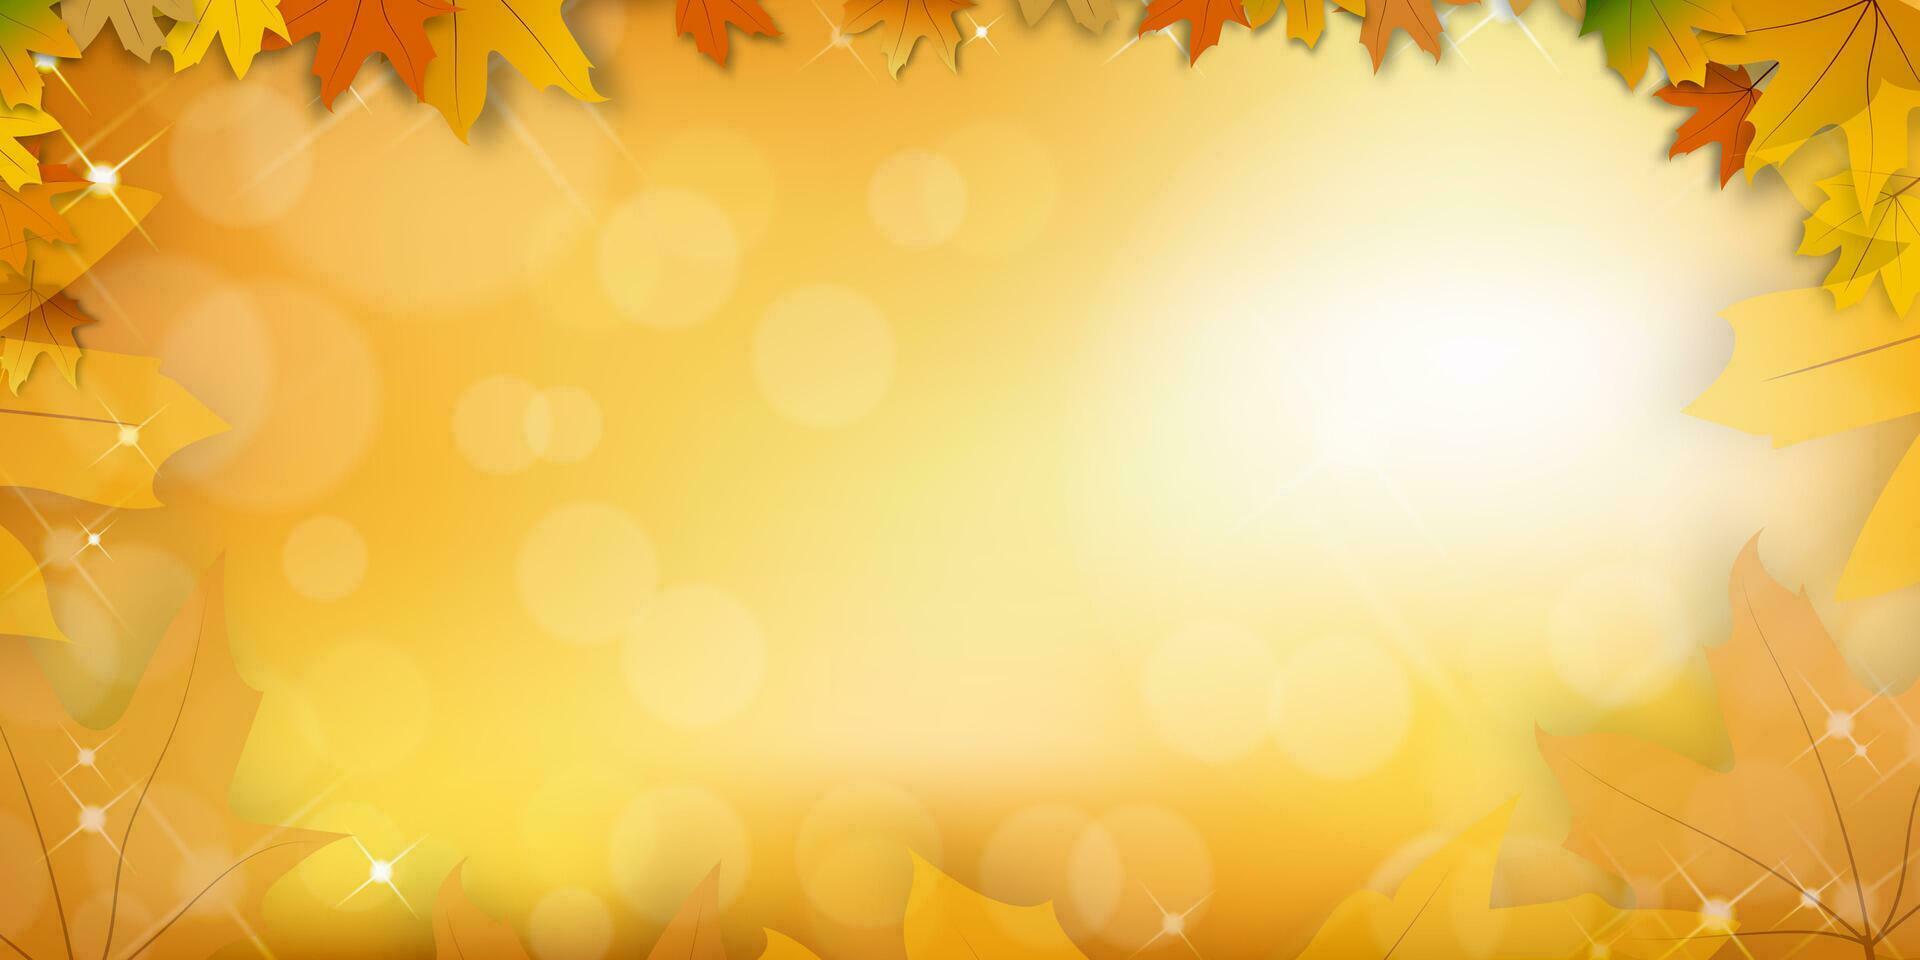 otoño fondo, otoño o arce hojas frontera marco con bokeh naturaleza ligero en naranja fondo, otoño temporada concepto con arce follaje en desenfocado luz de sol efecto con Copiar espacio vector